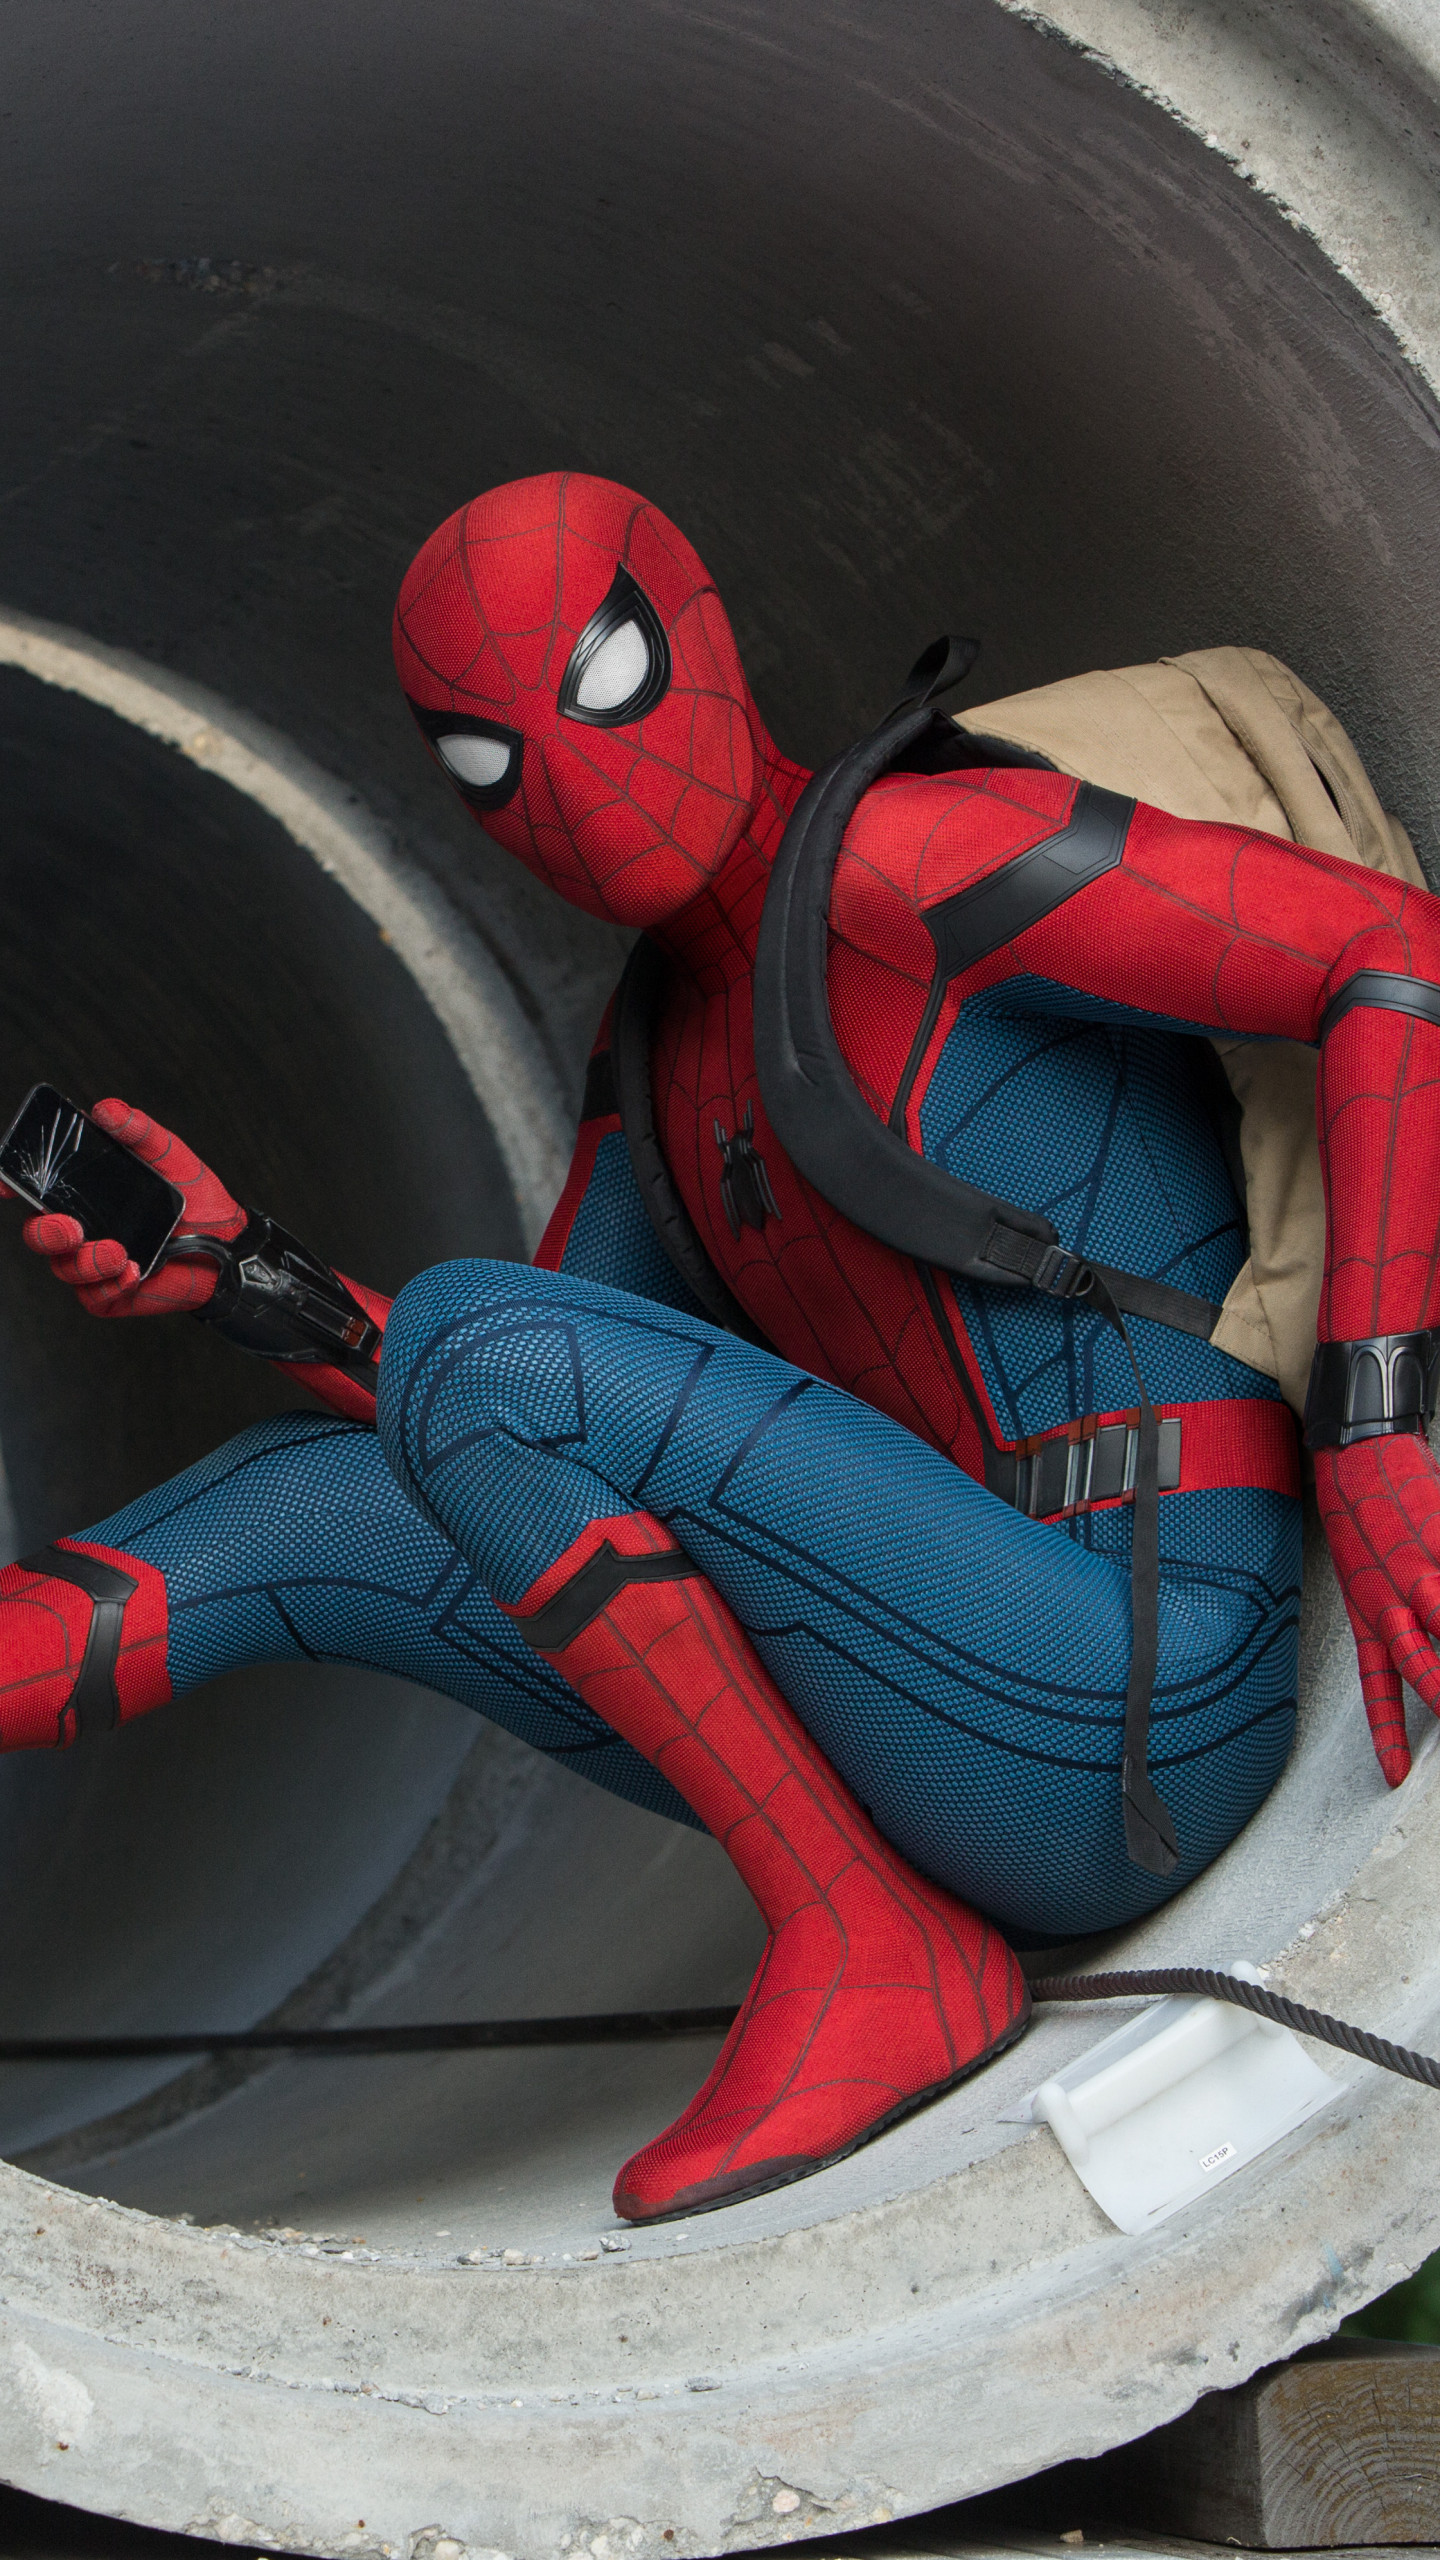 Wallpaper Spider-Man: Homecoming, 5k, Movies #140841440 x 2560